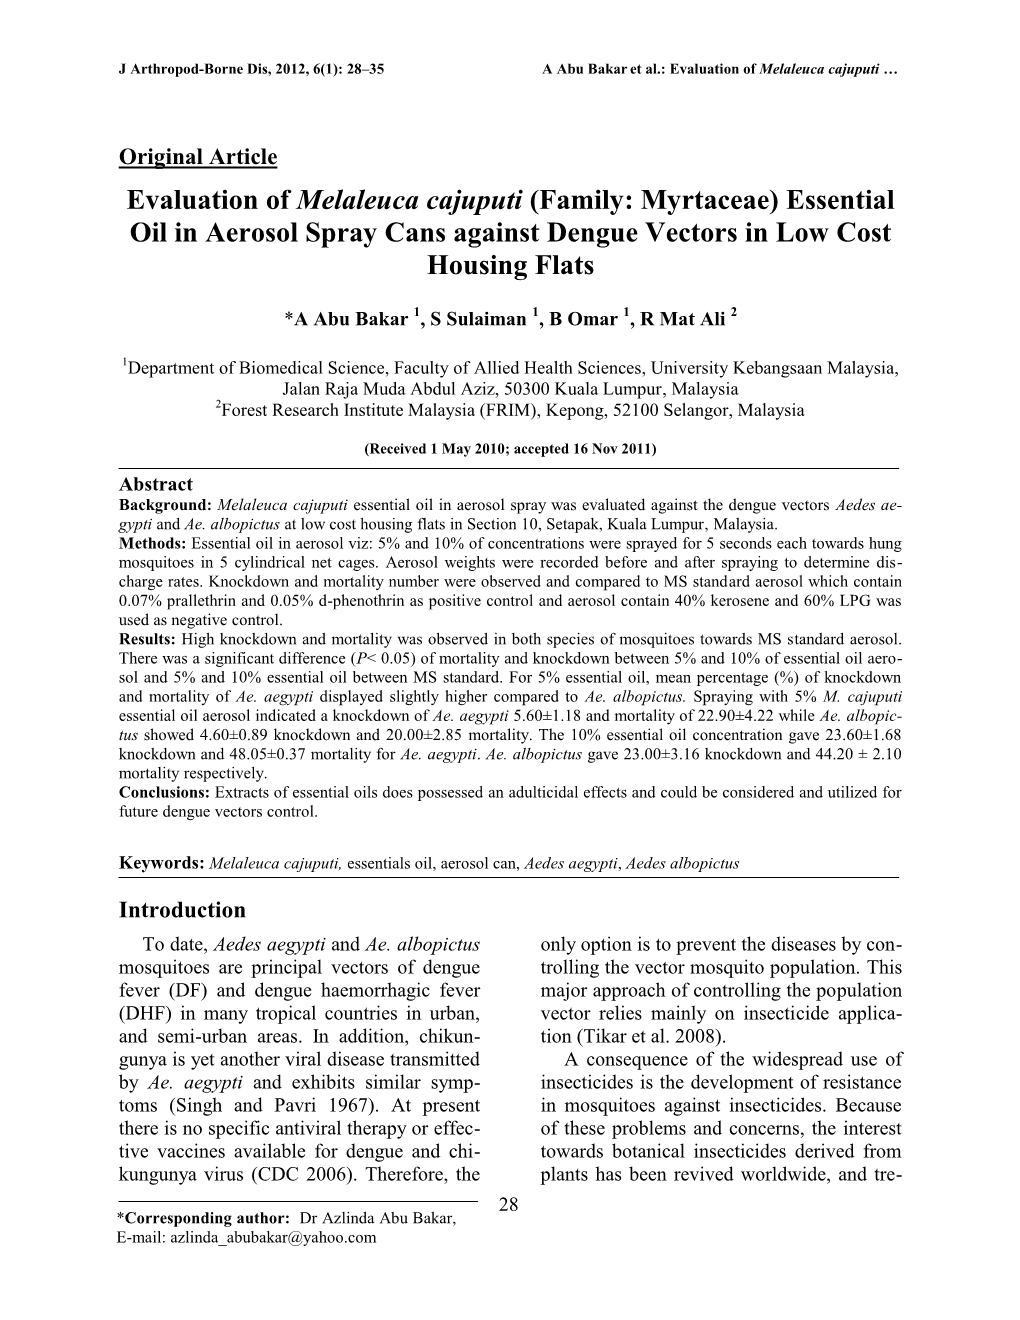 Evaluation of Melaleuca Cajuputi (Family: Myrtaceae) Essential Oil in Aerosol Spray Cans Against Dengue Vectors in Low Cost Housing Flats